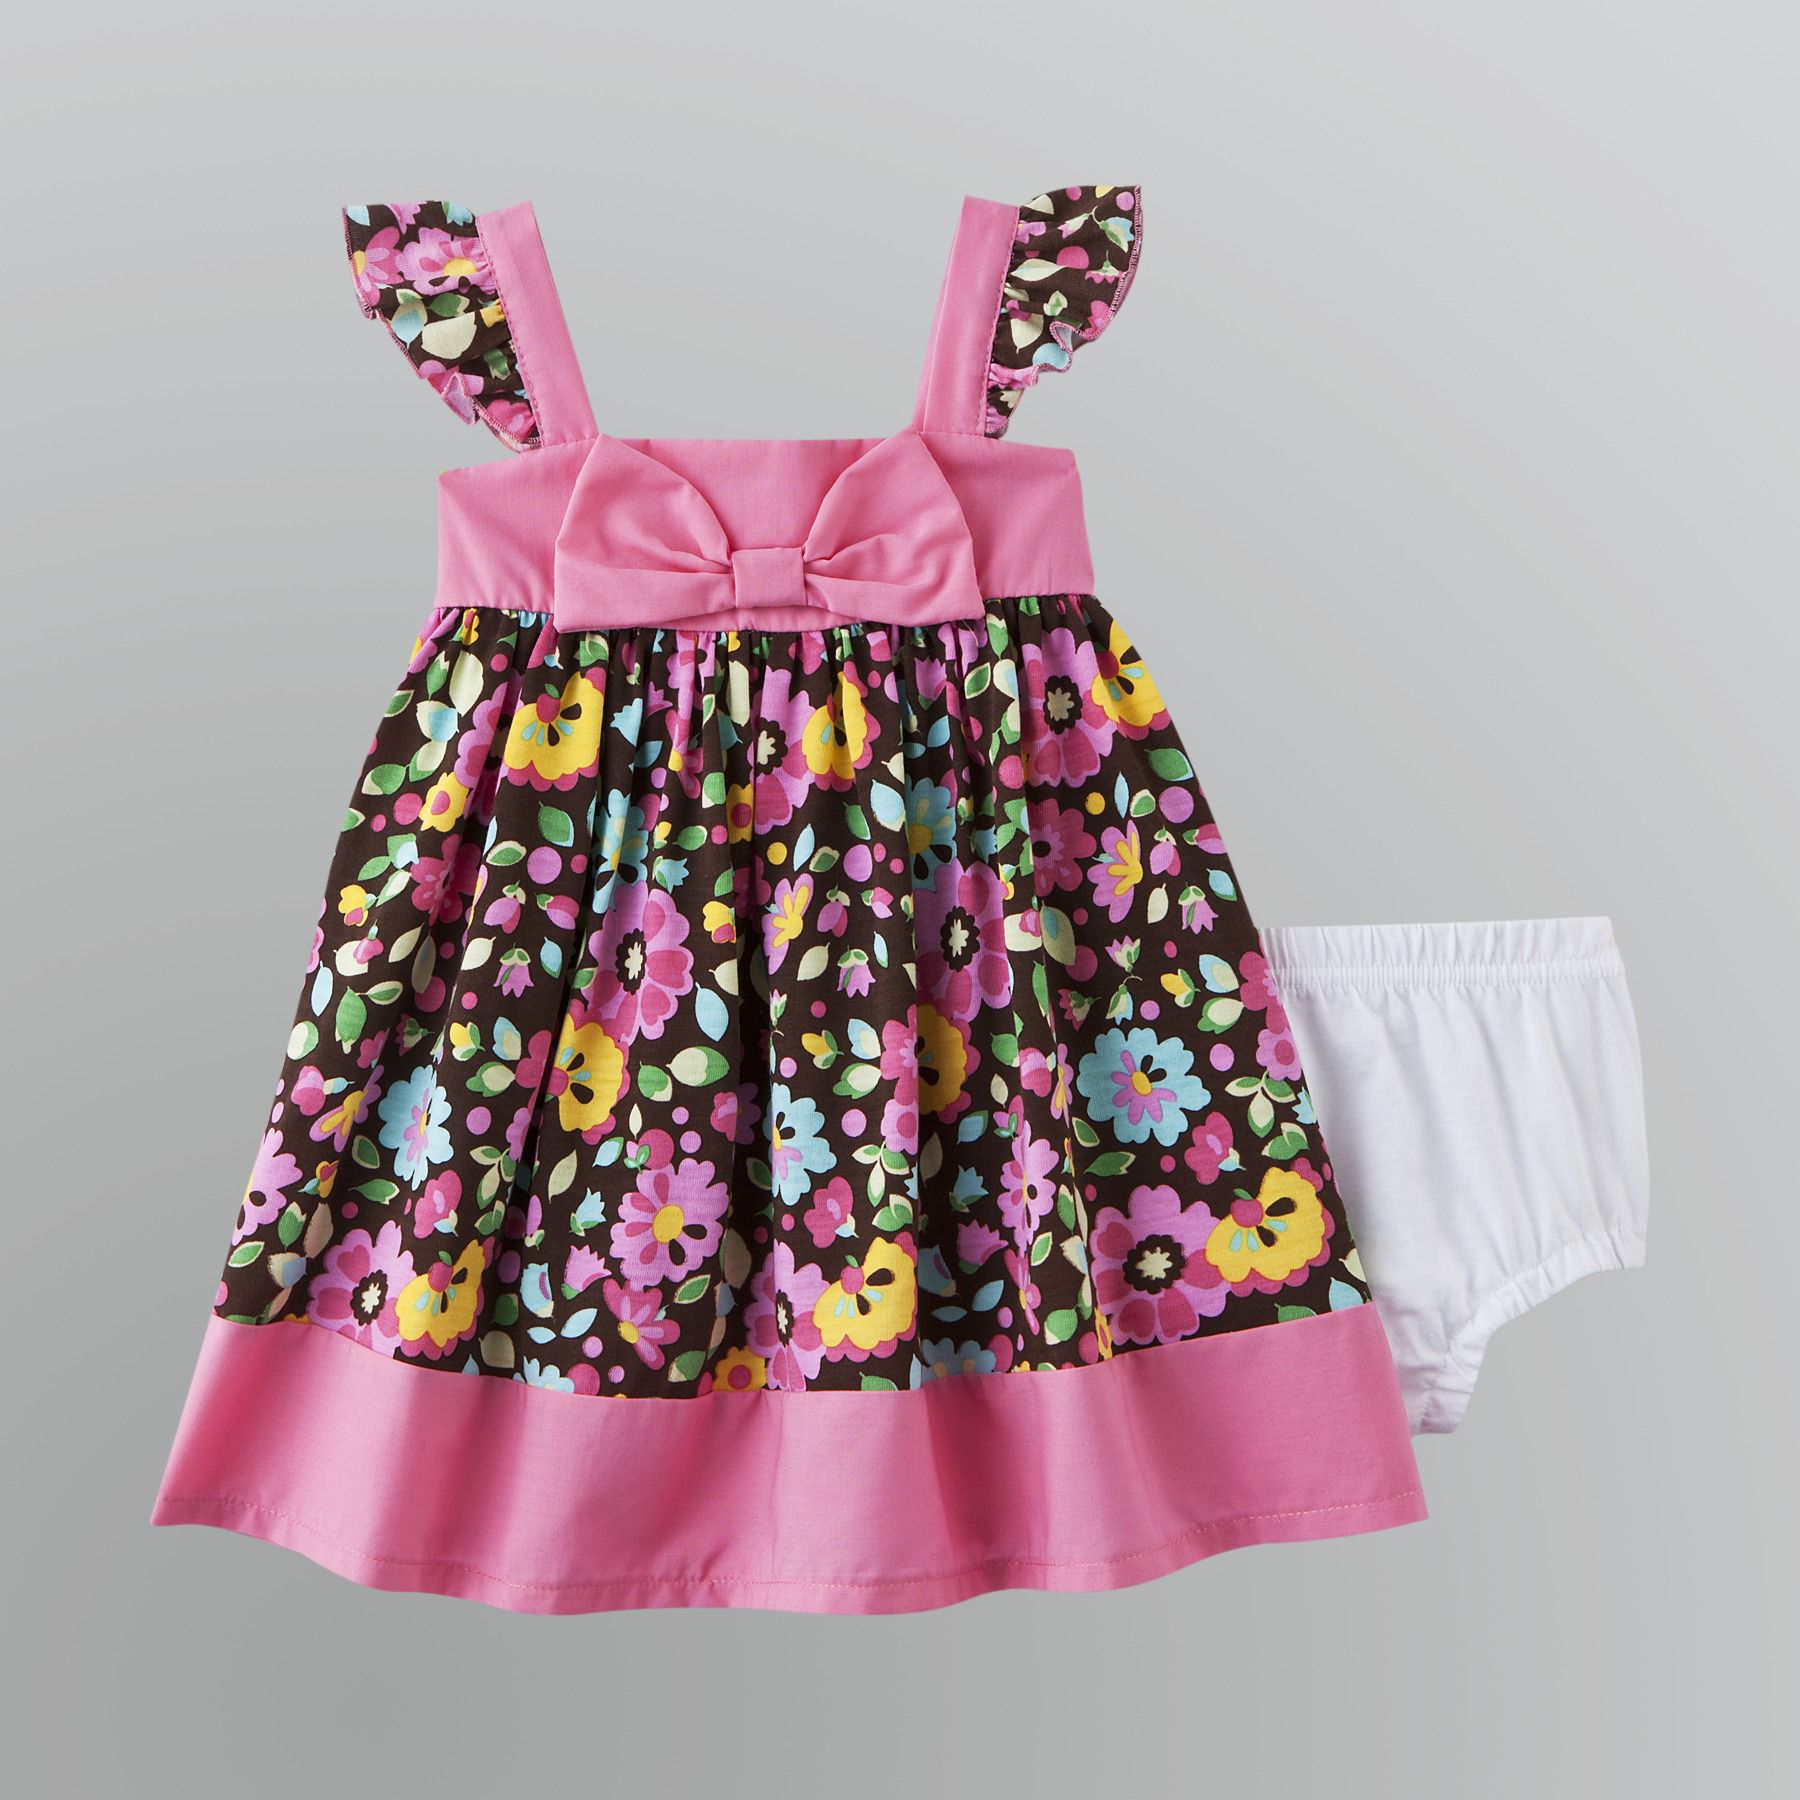 WonderKids Infant and Toddler Girl's Floral Apron Dress